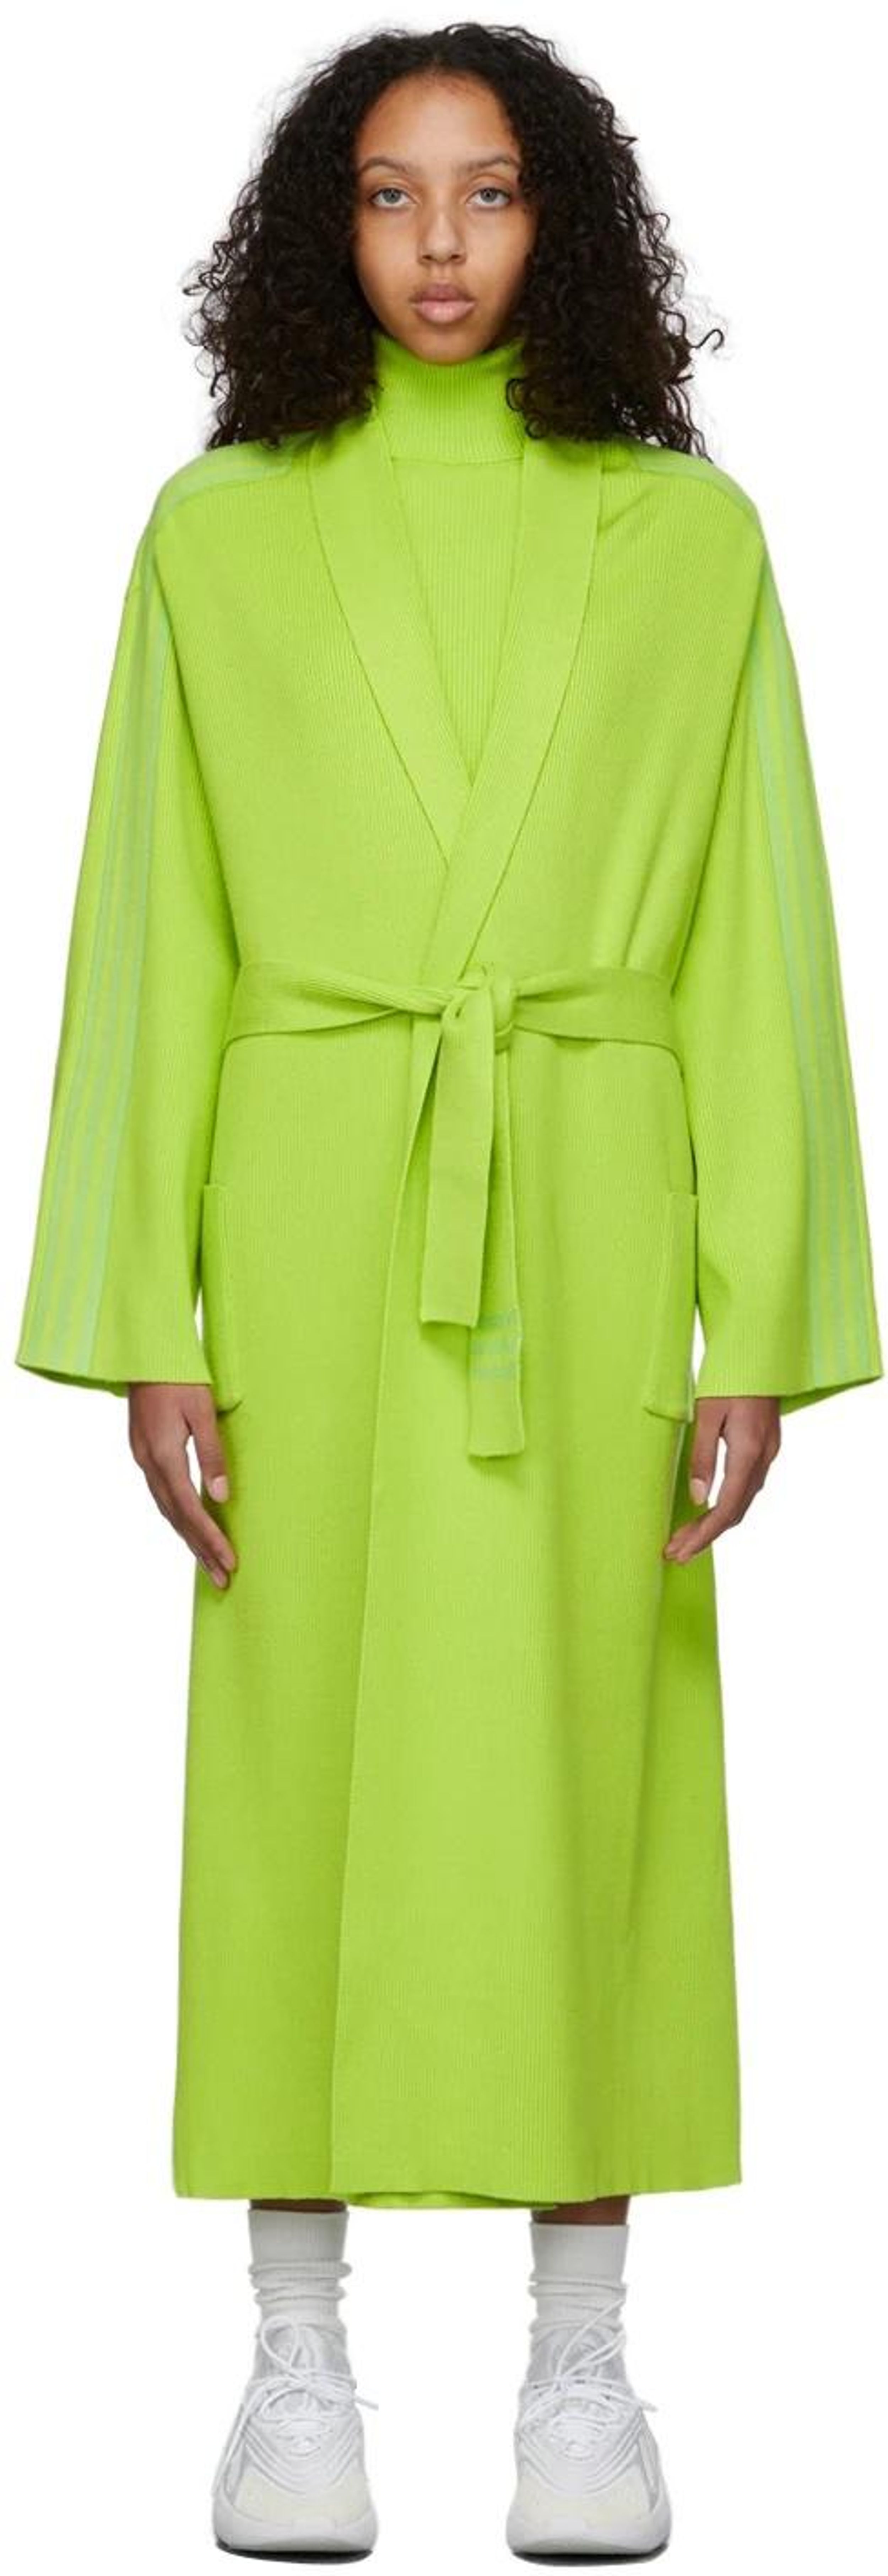 Green Rib Knit Robe